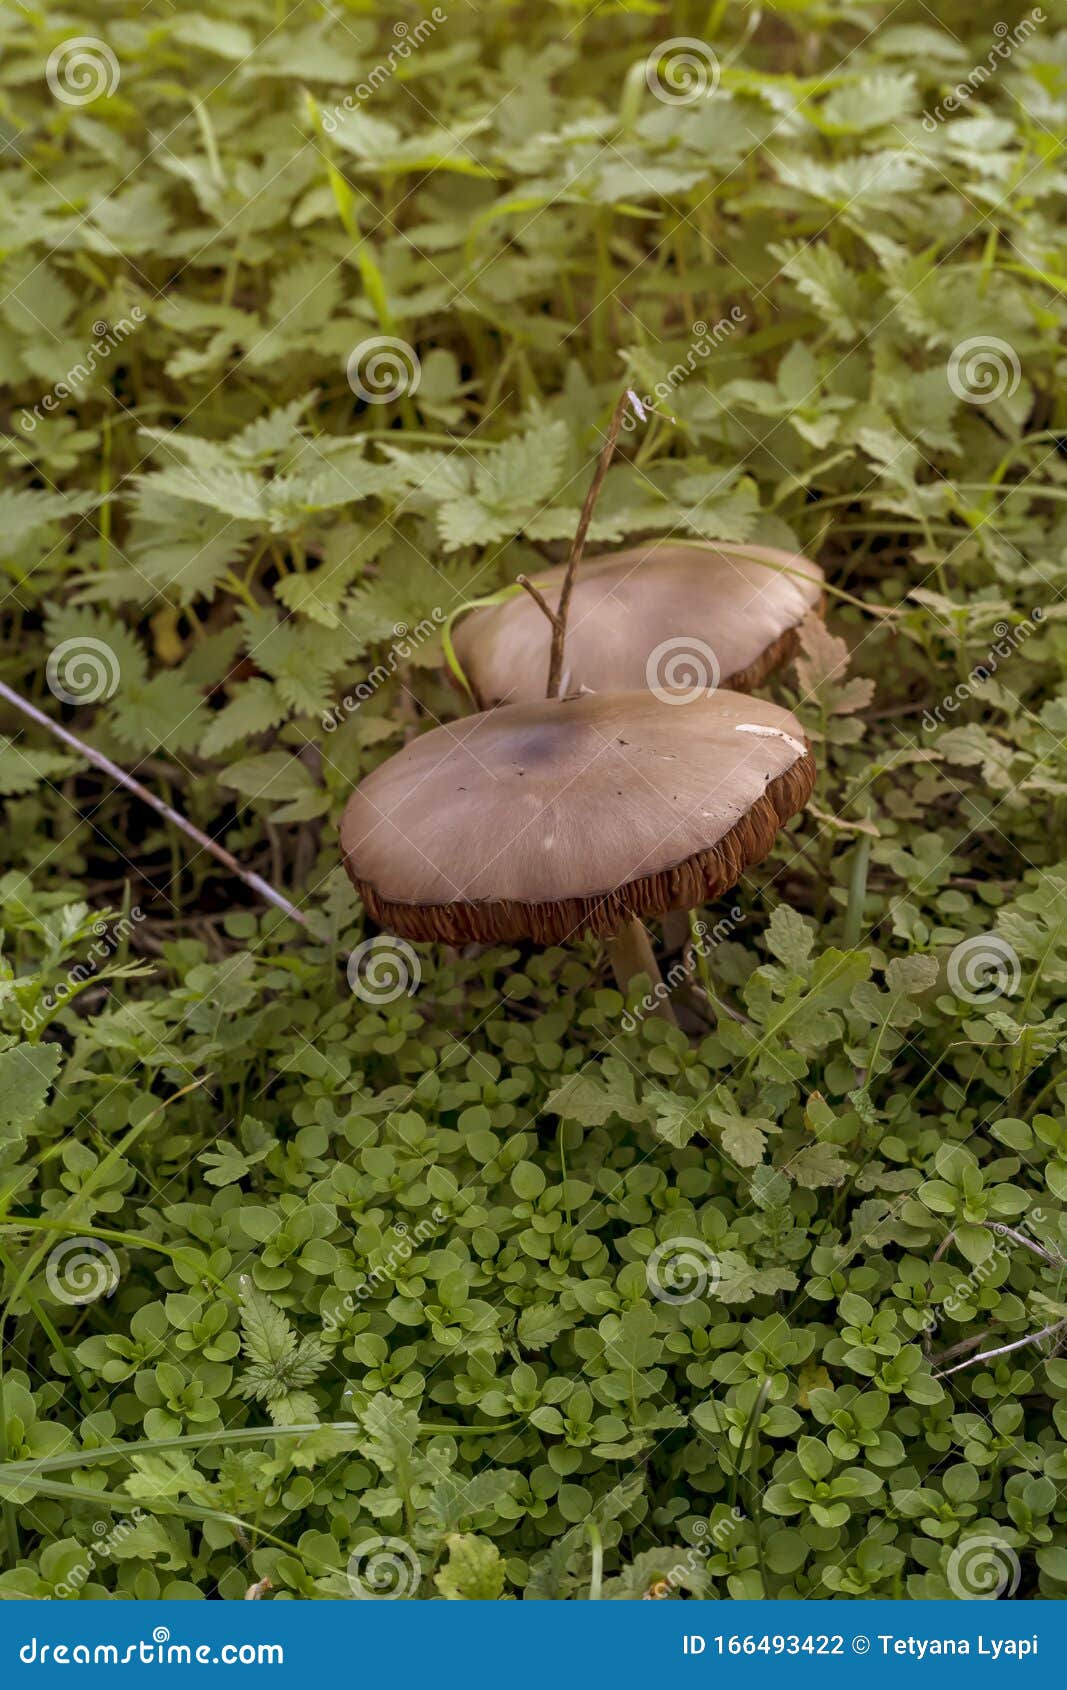 The Brown Mushrooms Volvopluteus Gloiocephalus Grow in Green Grass ...